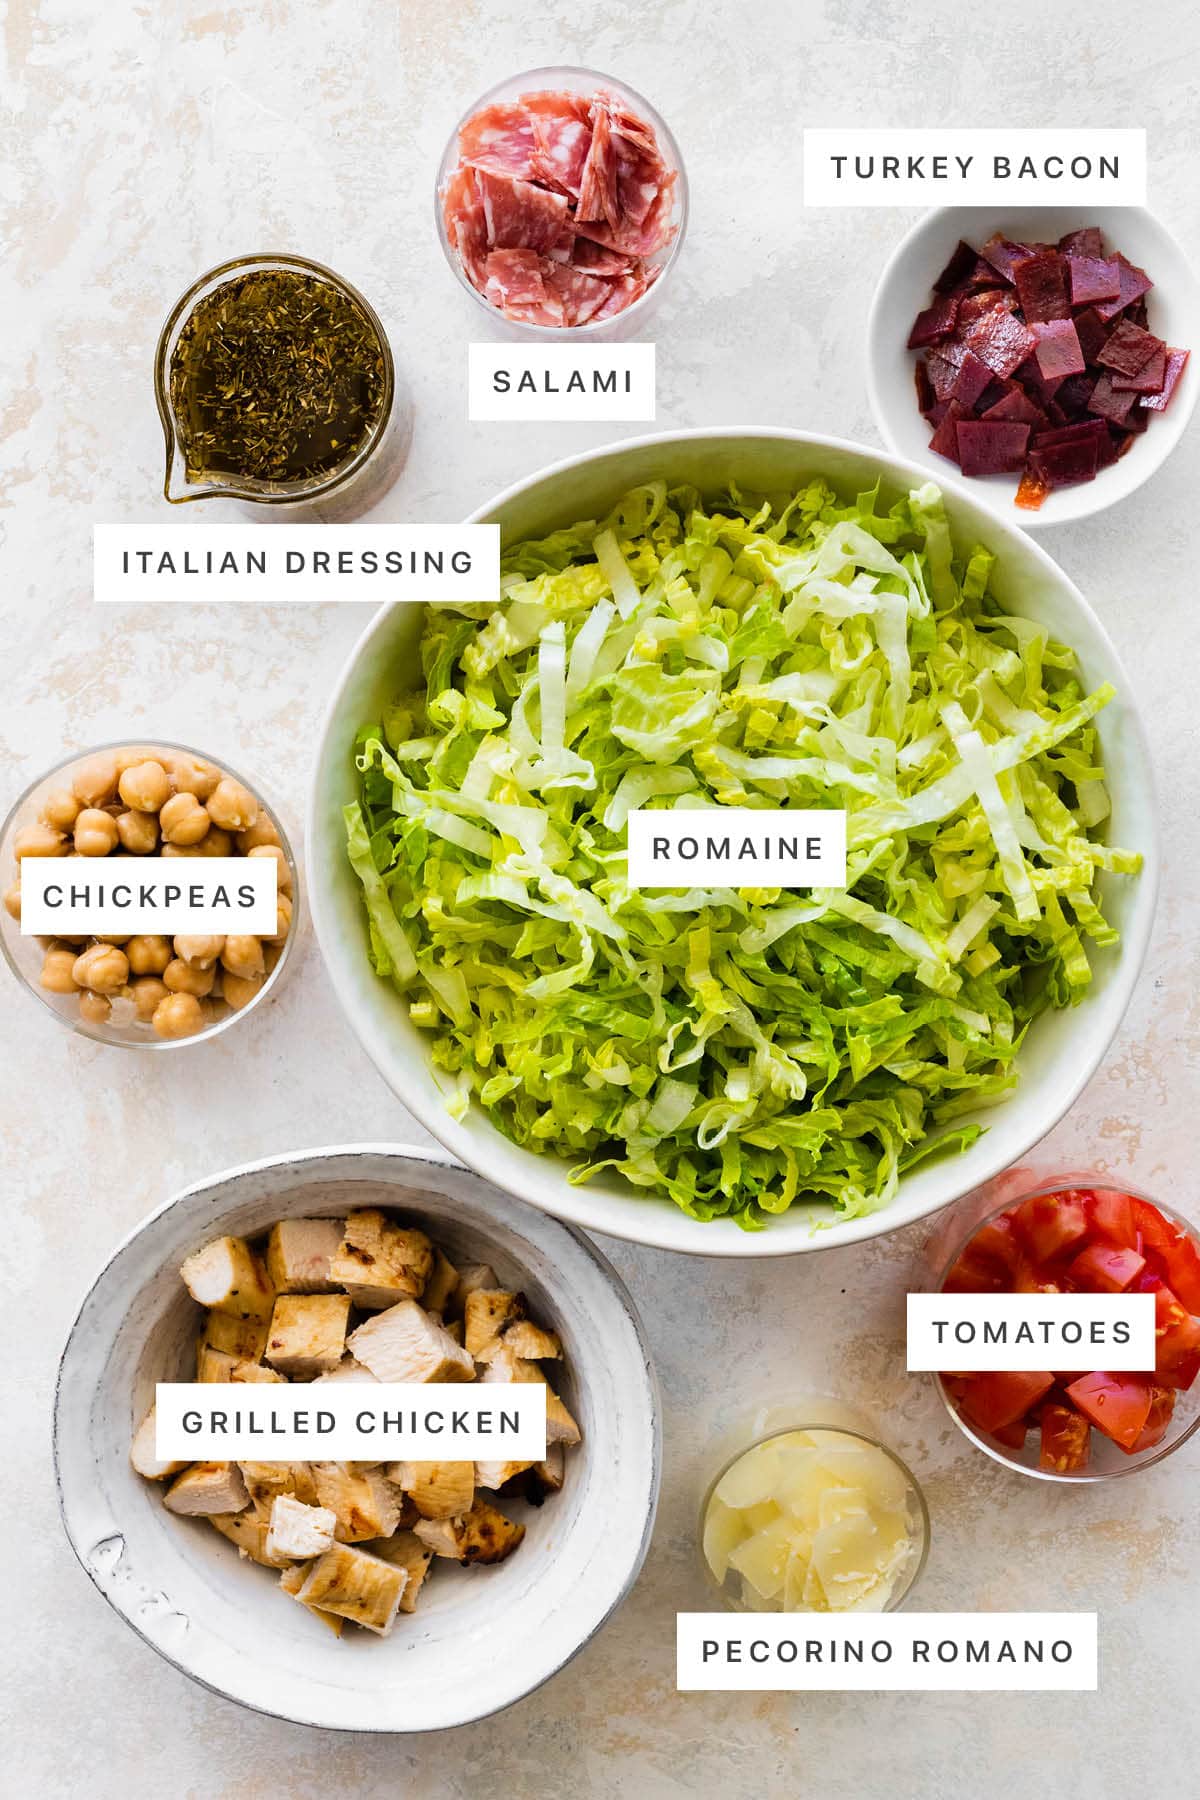 Ingredients measured out to make Jennifer Aniston Cobb Salad: Italian dressing, salami, turkey bacon, romaine, chickpeas, grilled chicken, pecorino romano and tomatoes.